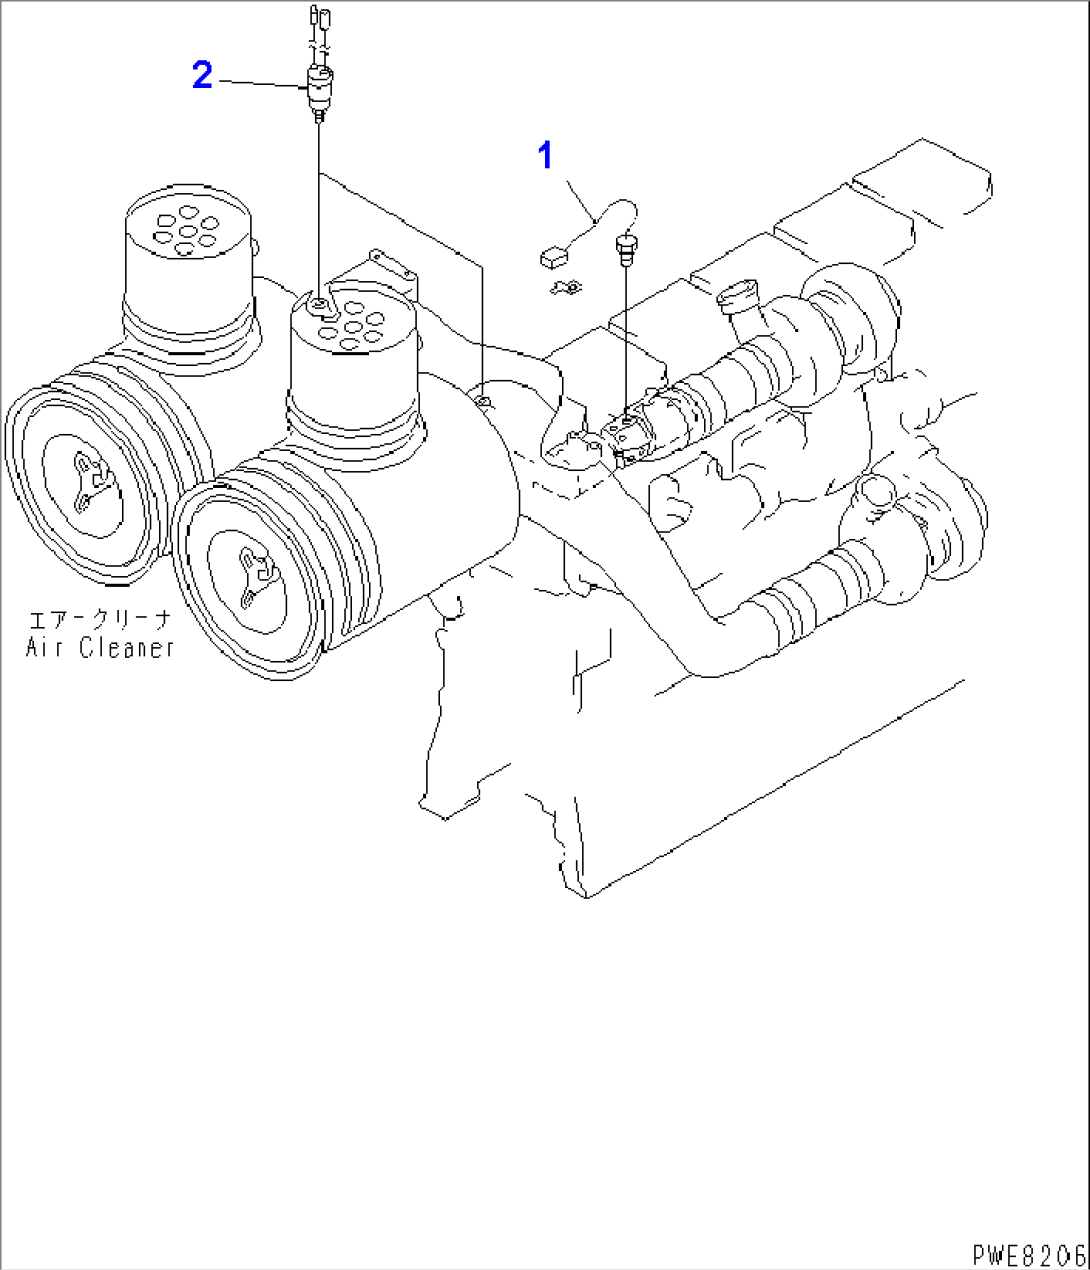 ENGINE (SENSOR AND INDICATOR)(#50001-50022)